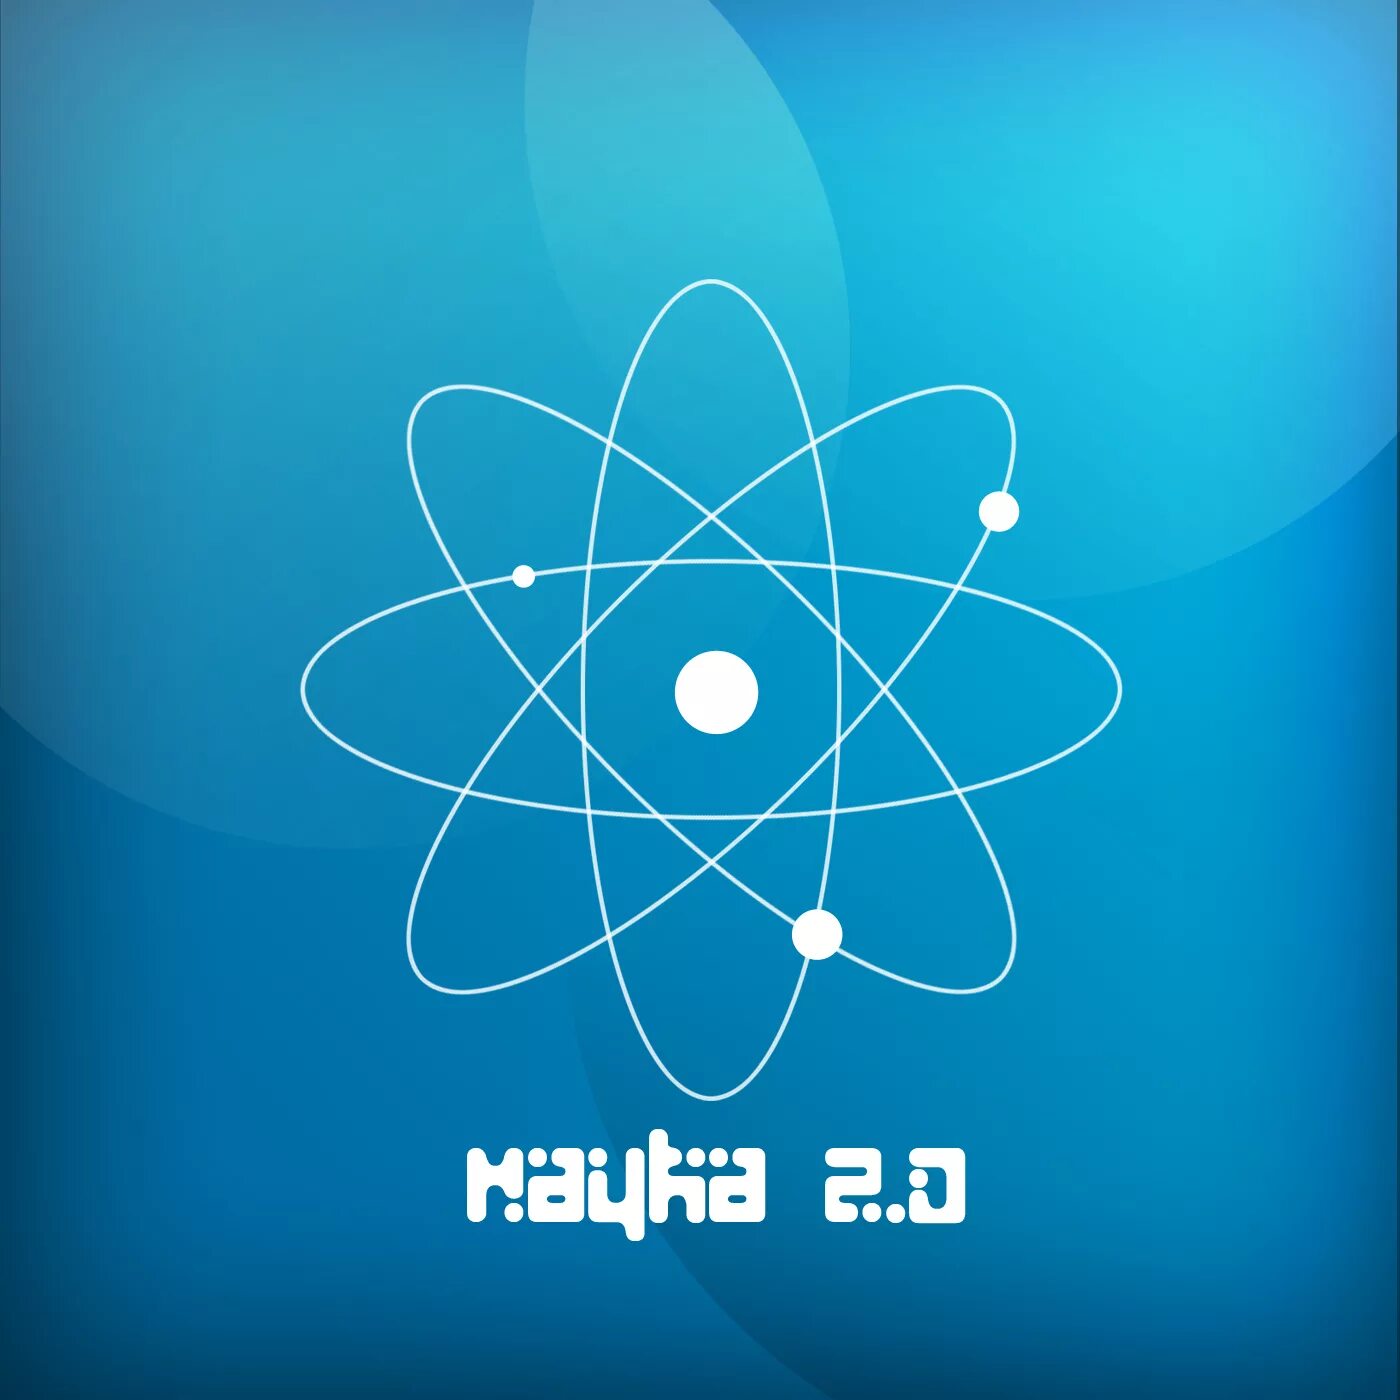 Включи наука 2. Телеканал наука. Наука 2. Канал наука 2.0. Логотип канала наука.